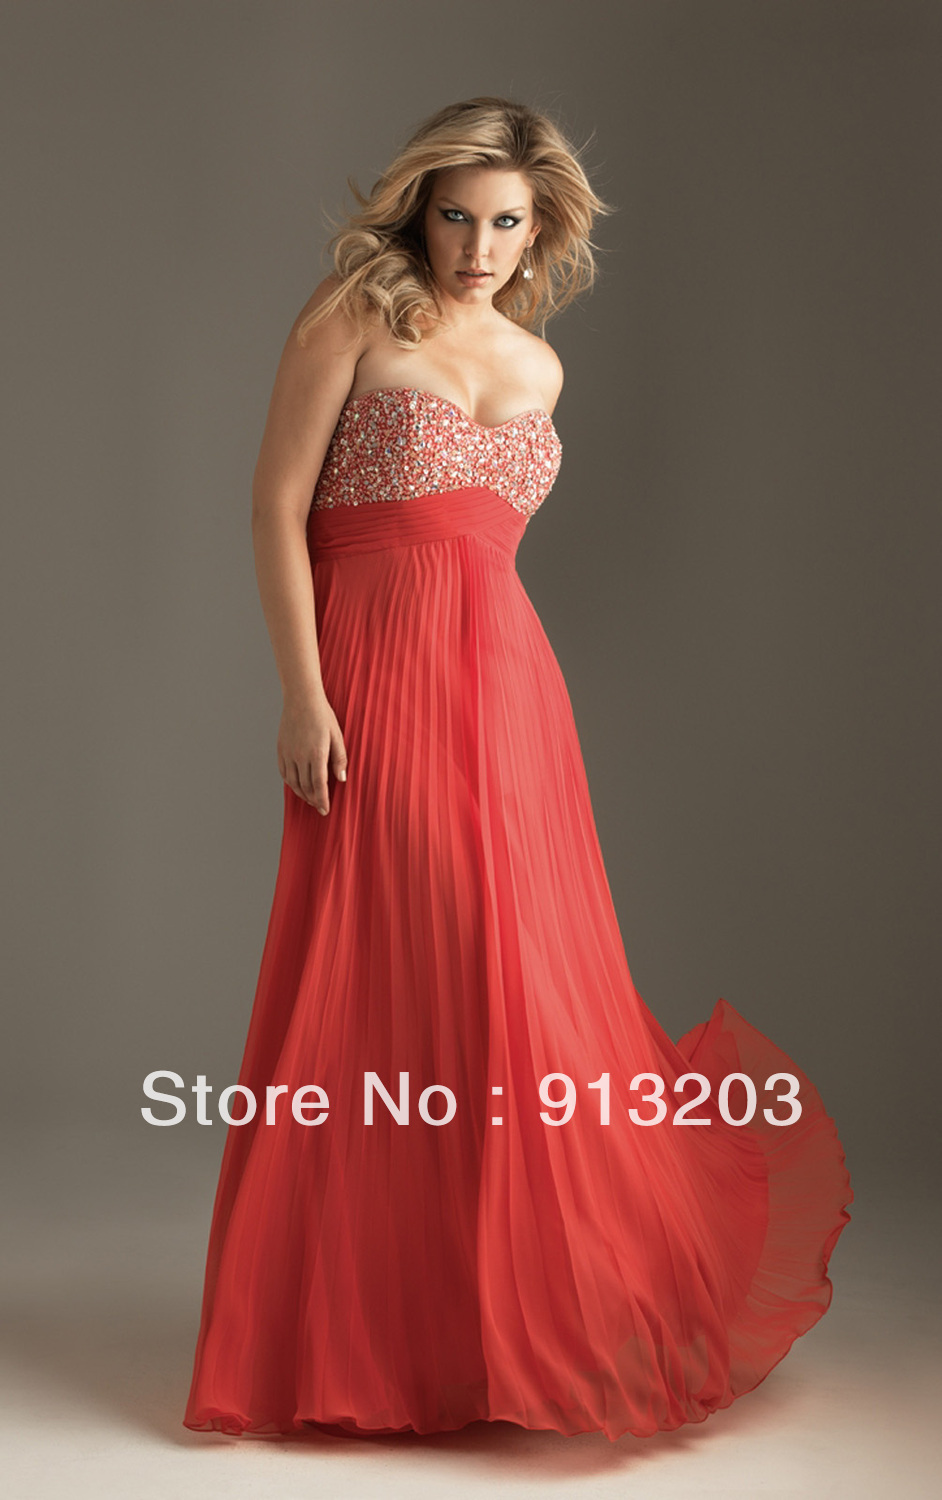 Plus Size Orange Cute A-line Sweetheart Floor-length Prom Dress 2013 New Arrival